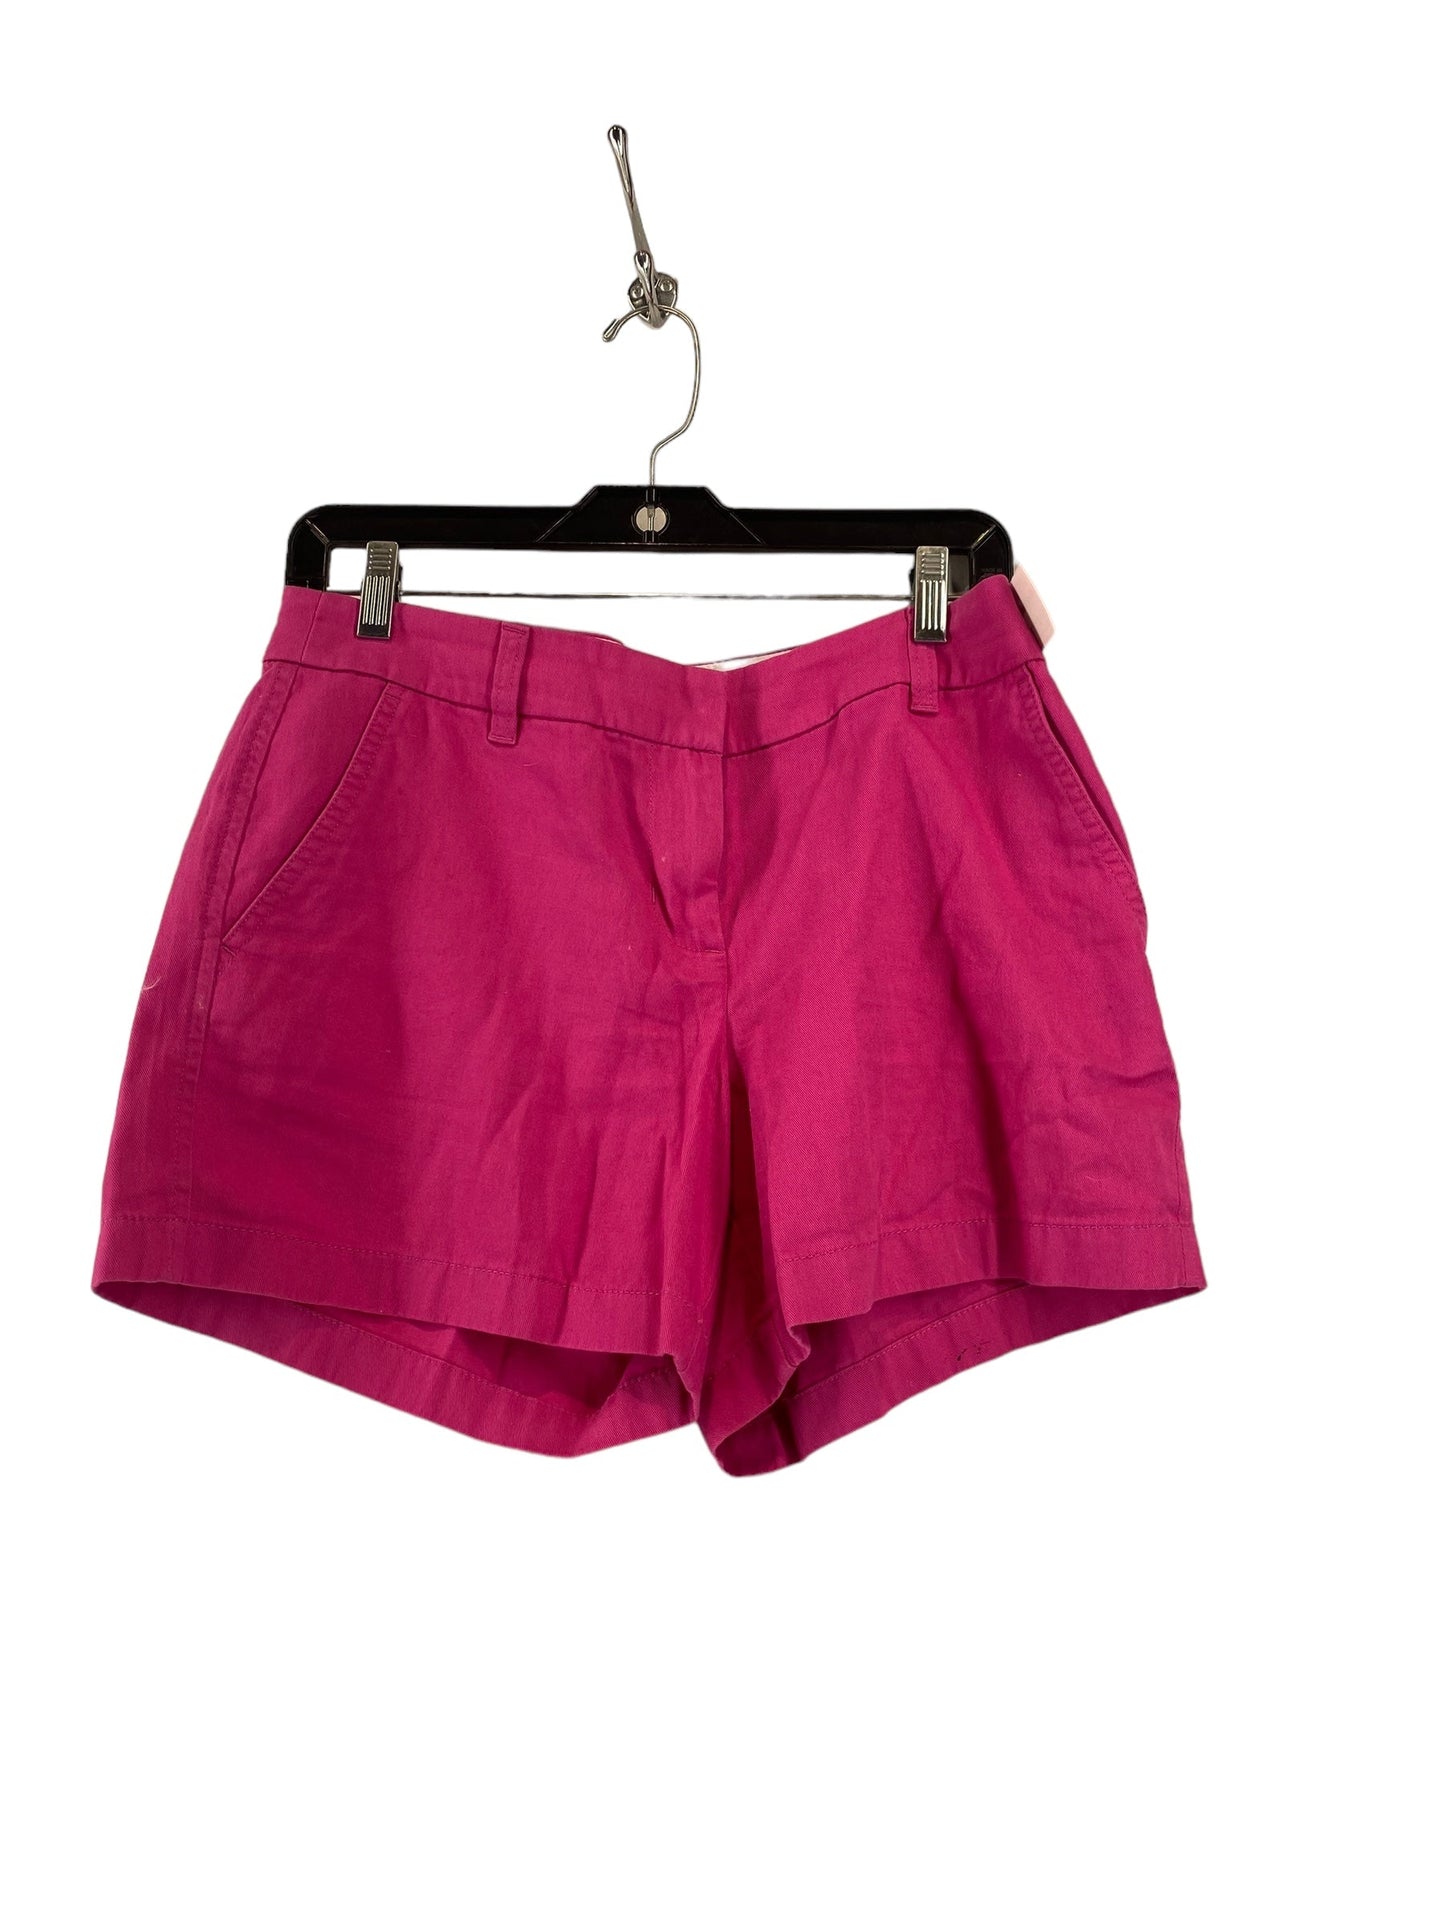 Pink Shorts J. Crew, Size 6